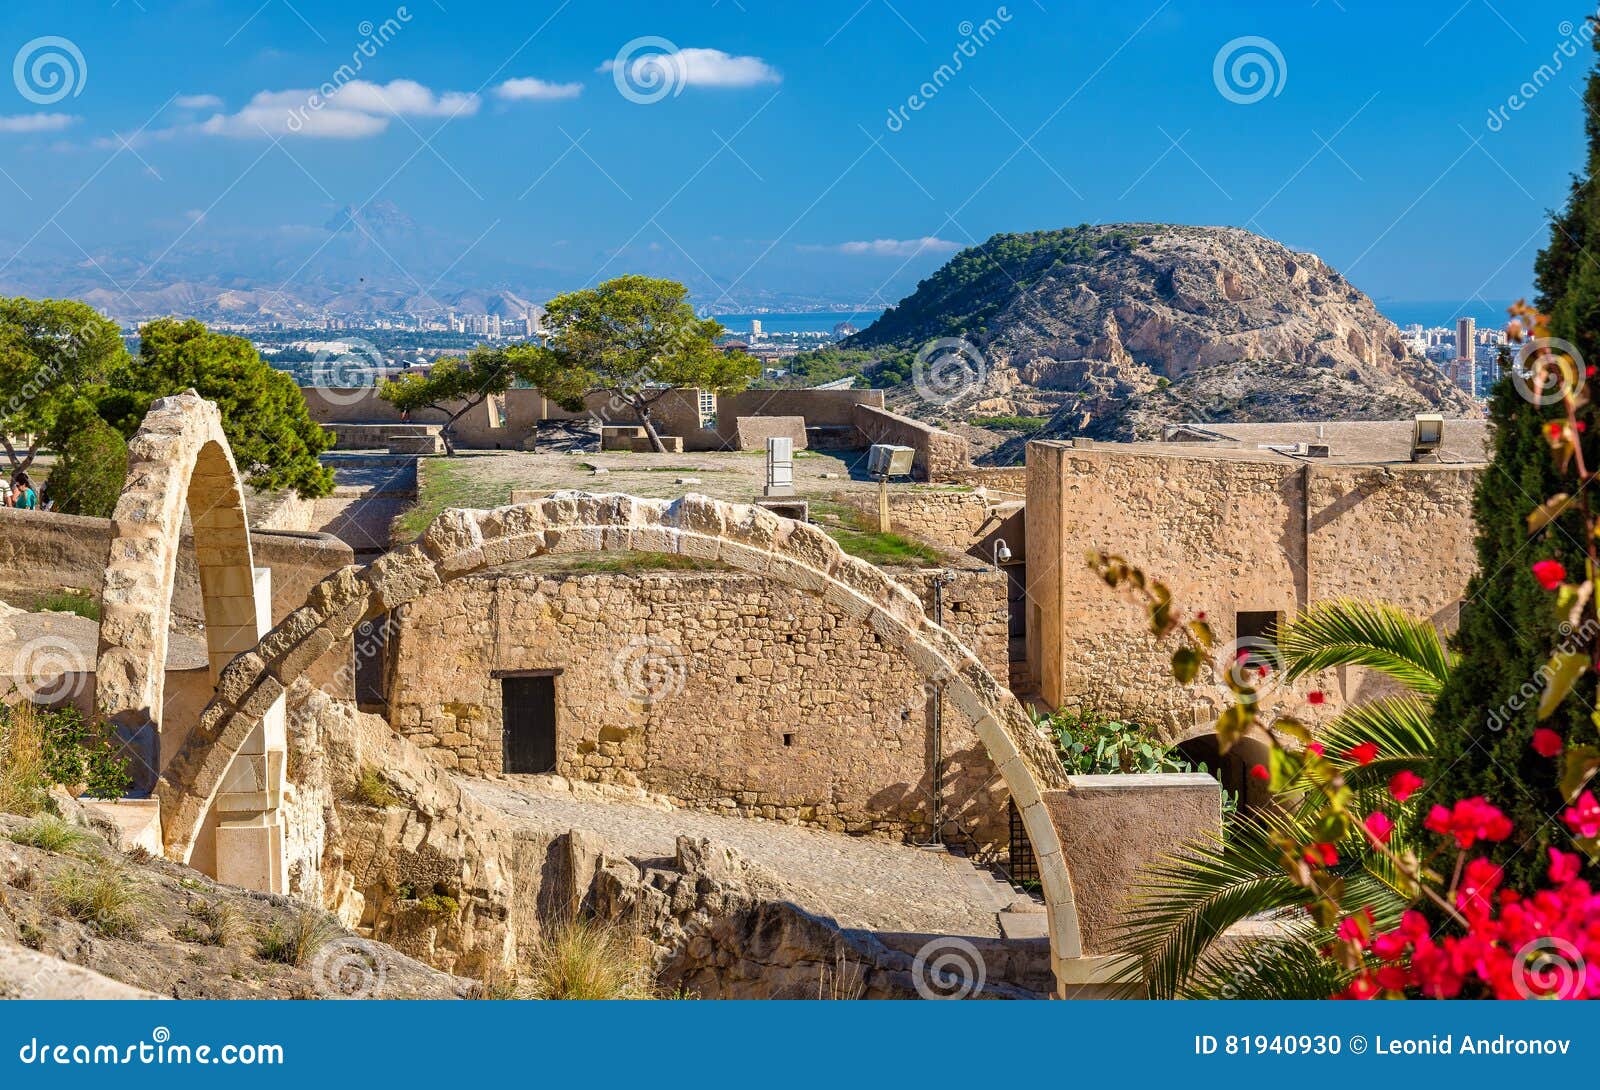 ruins of arched gates at santa barbara castle in alicante, spain